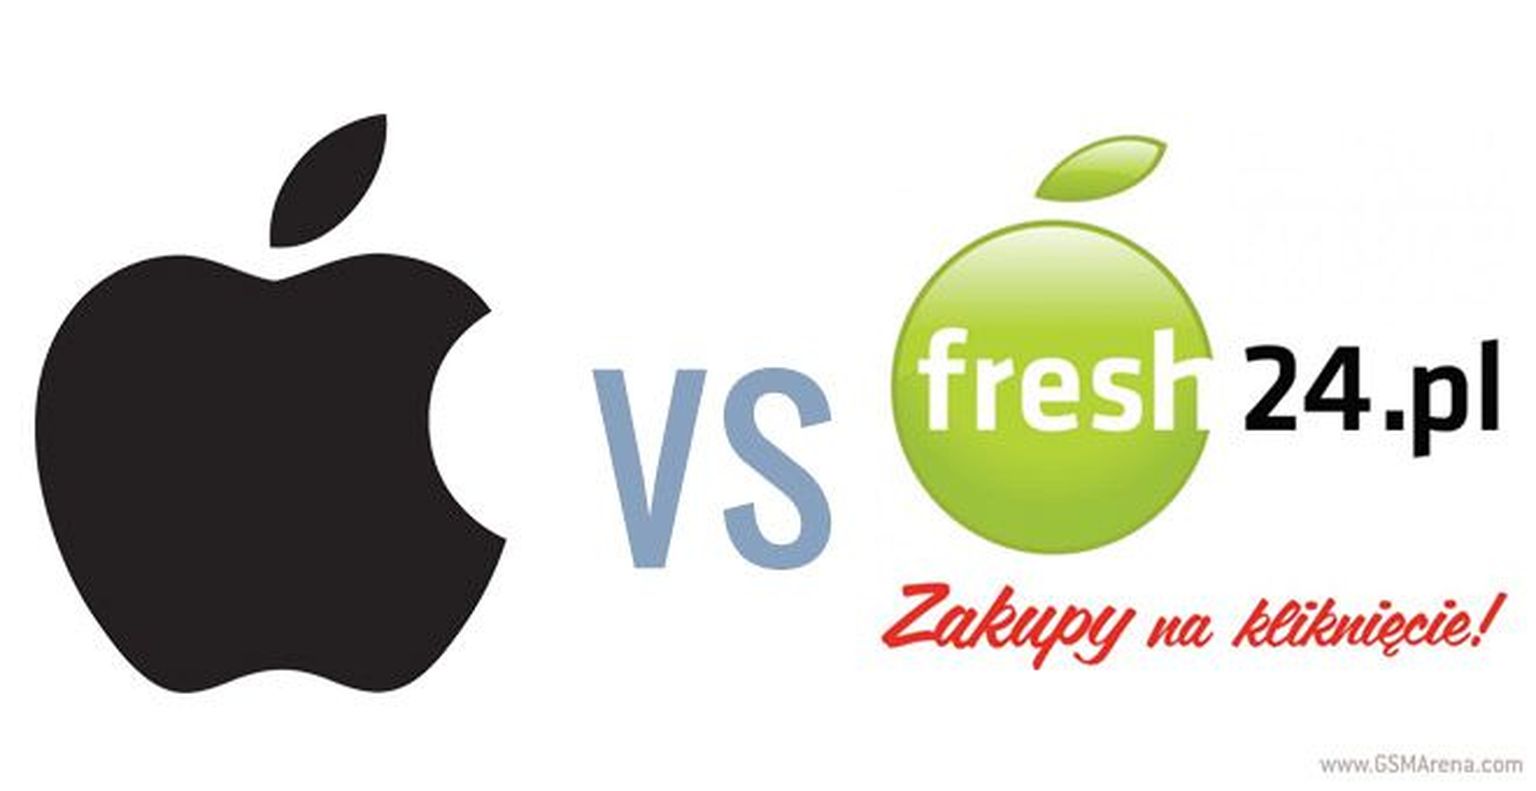 Apple'i ja www.fresh24.pl logode võrdlus.